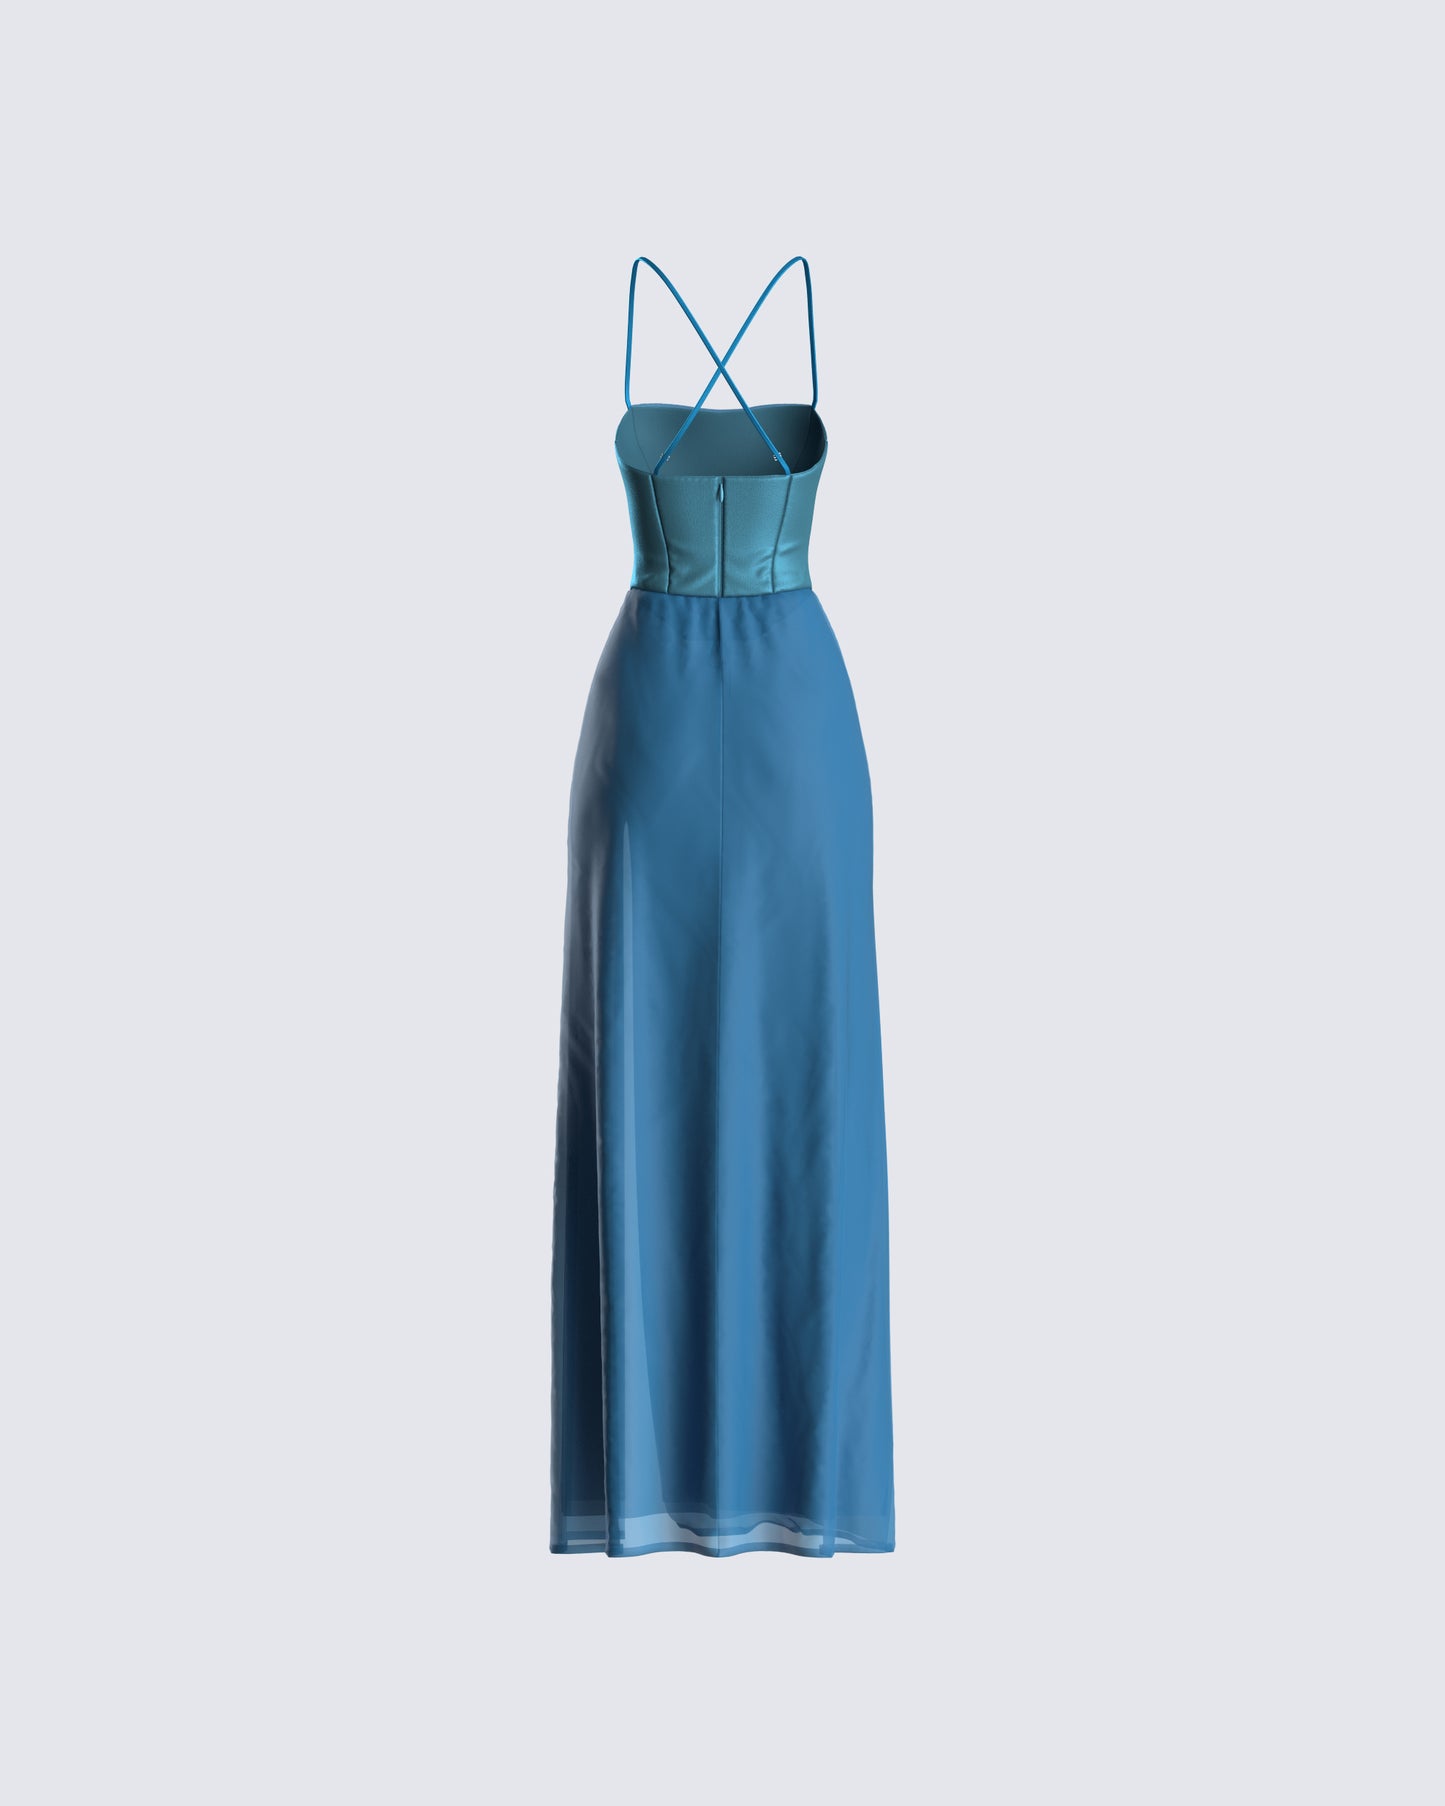 Tasma Teal Lace Bustier Dress